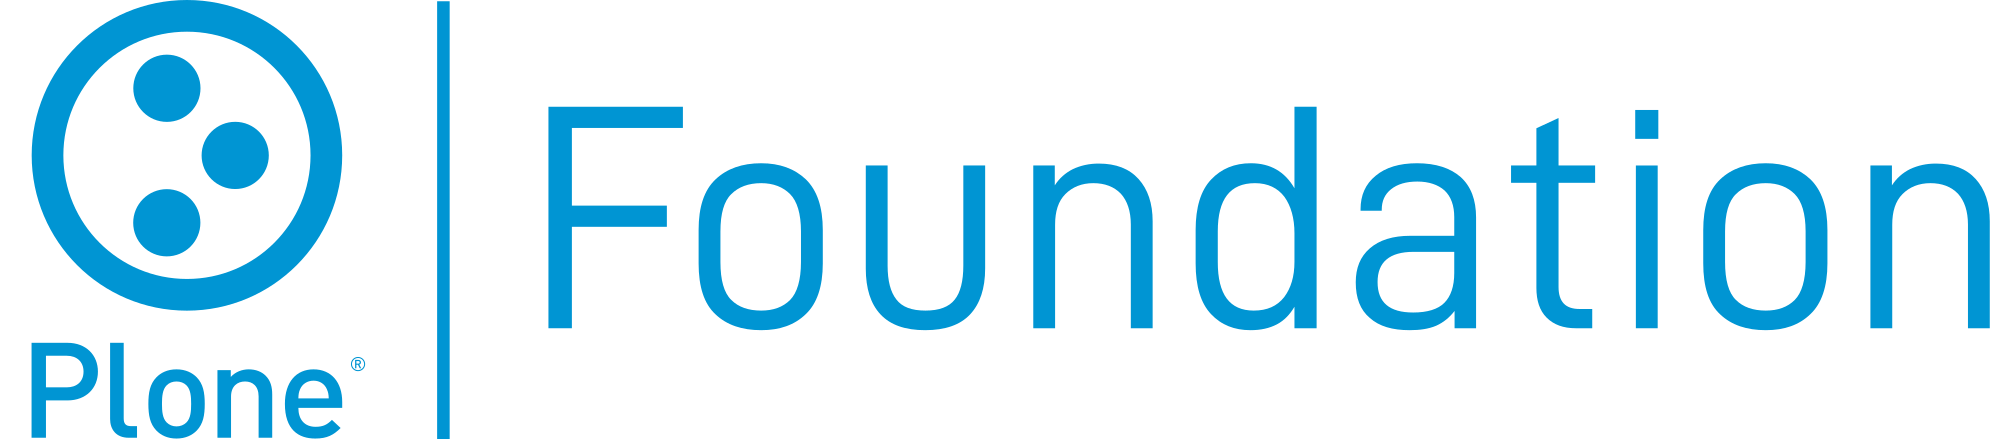 Plone Foundation Logo